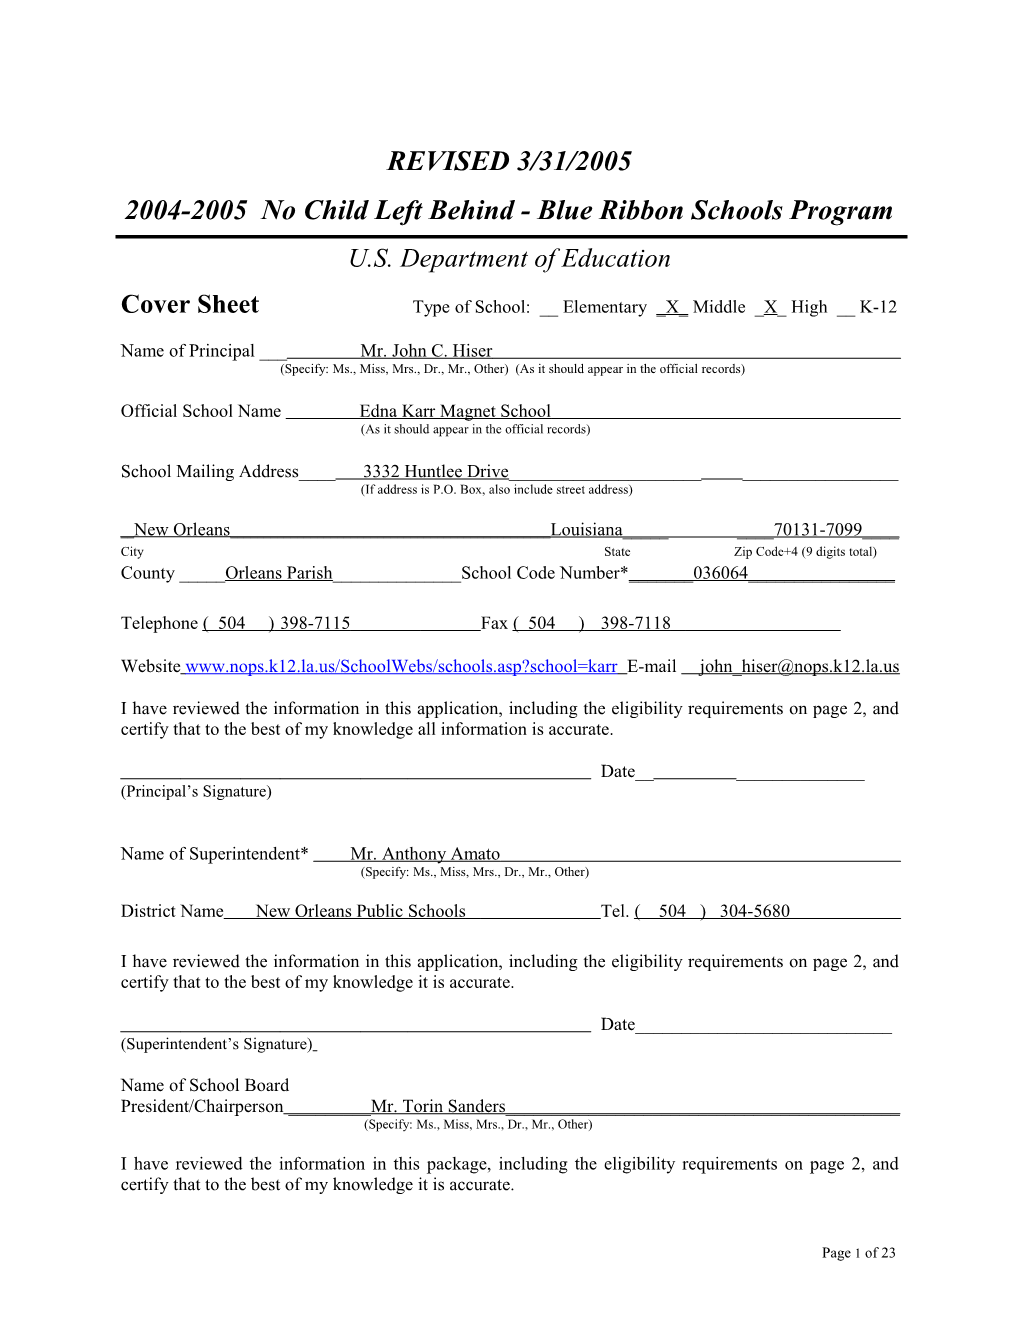 Edna Karr Magnet School Application: 2004-2005, No Child Left Behind - Blue Ribbon Schools